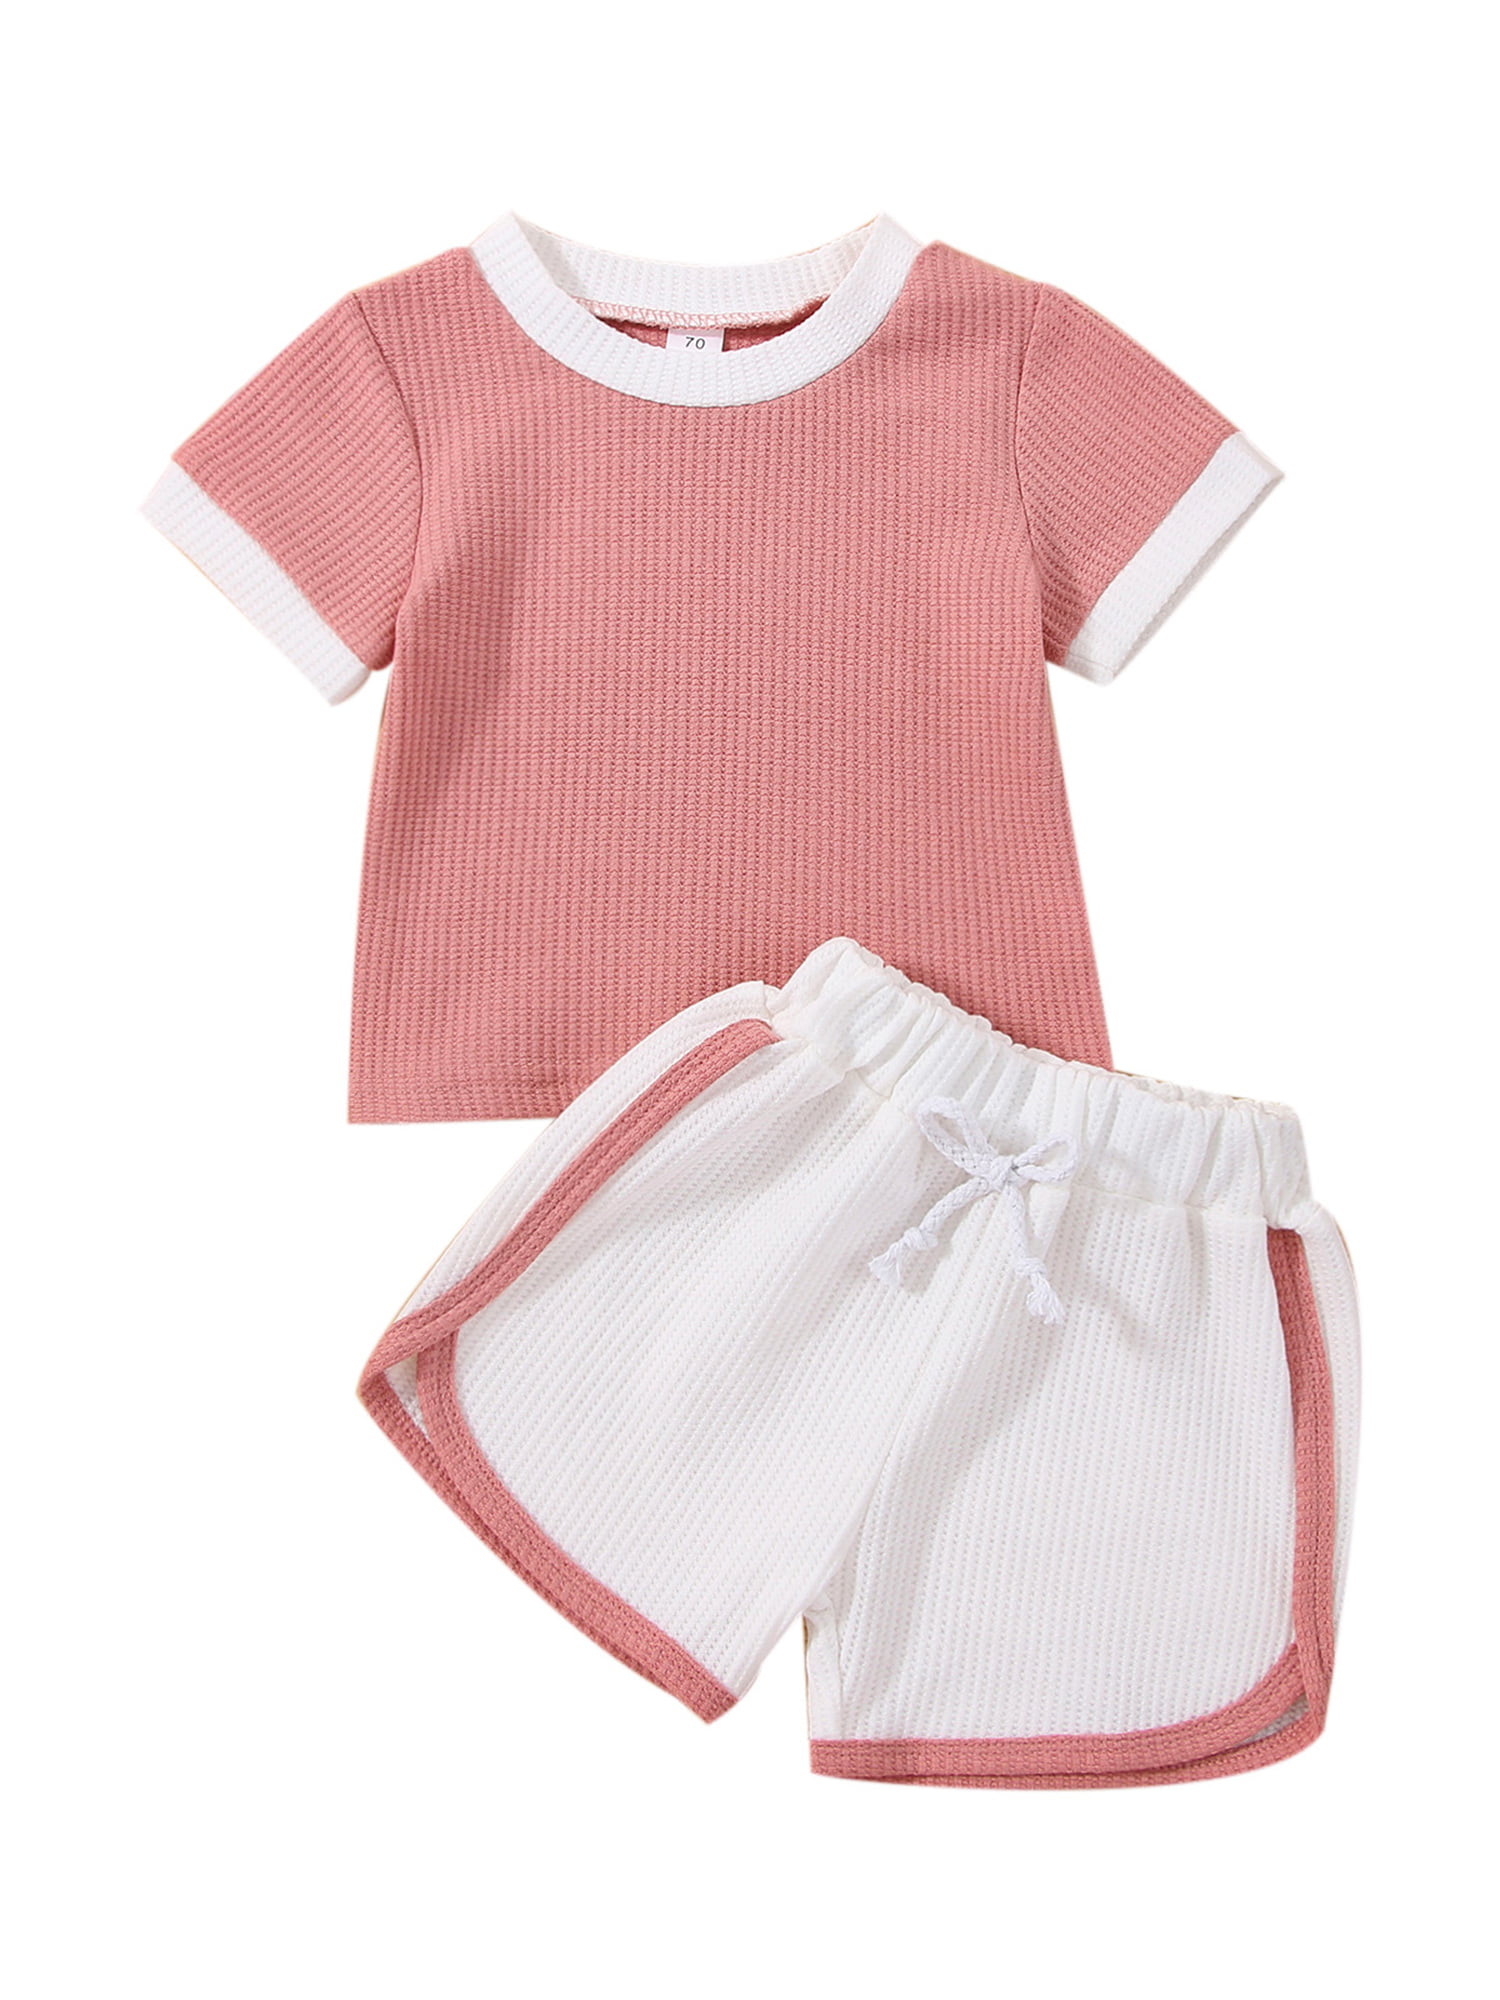 Babyset "star" light grey/Pink Clothing Unisex Kids Clothing Unisex Baby Clothing Clothing Sets 62; 3 pcs Gr 